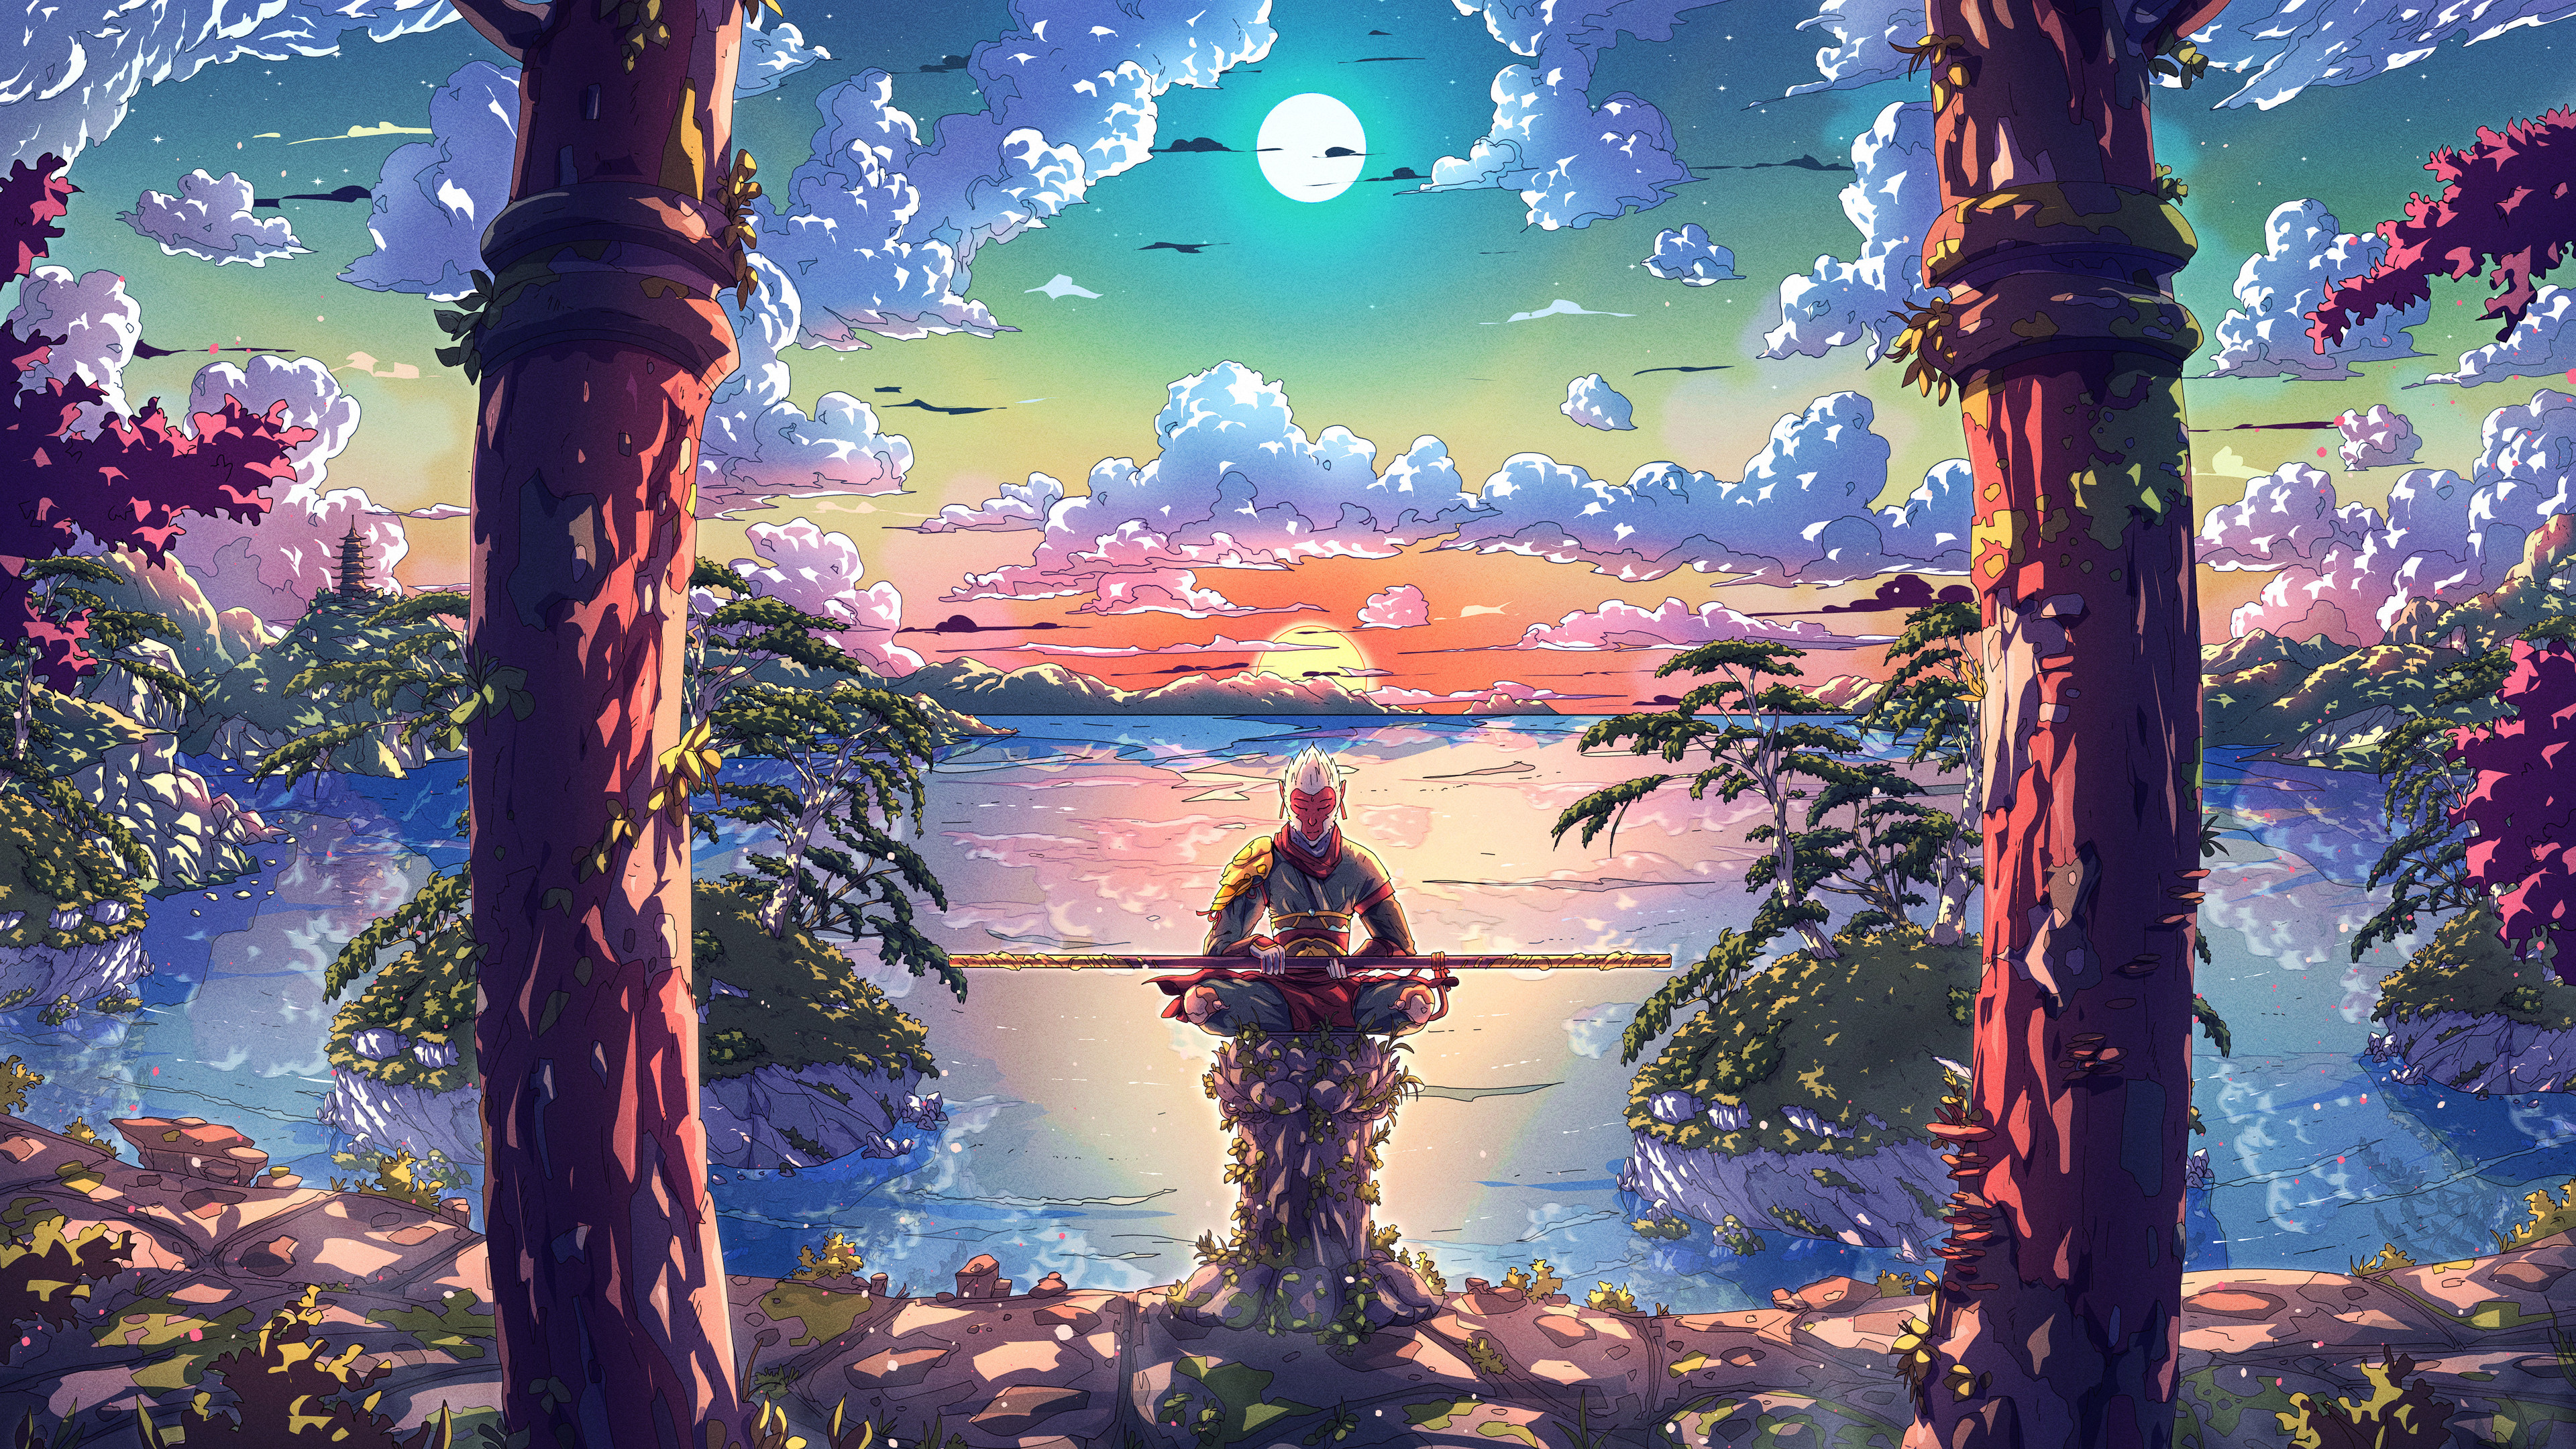 Christian Benavides Digital Art Fantasy Art Clouds River Reflection Moonlight Sunlight Sun Wukong La 3840x2160